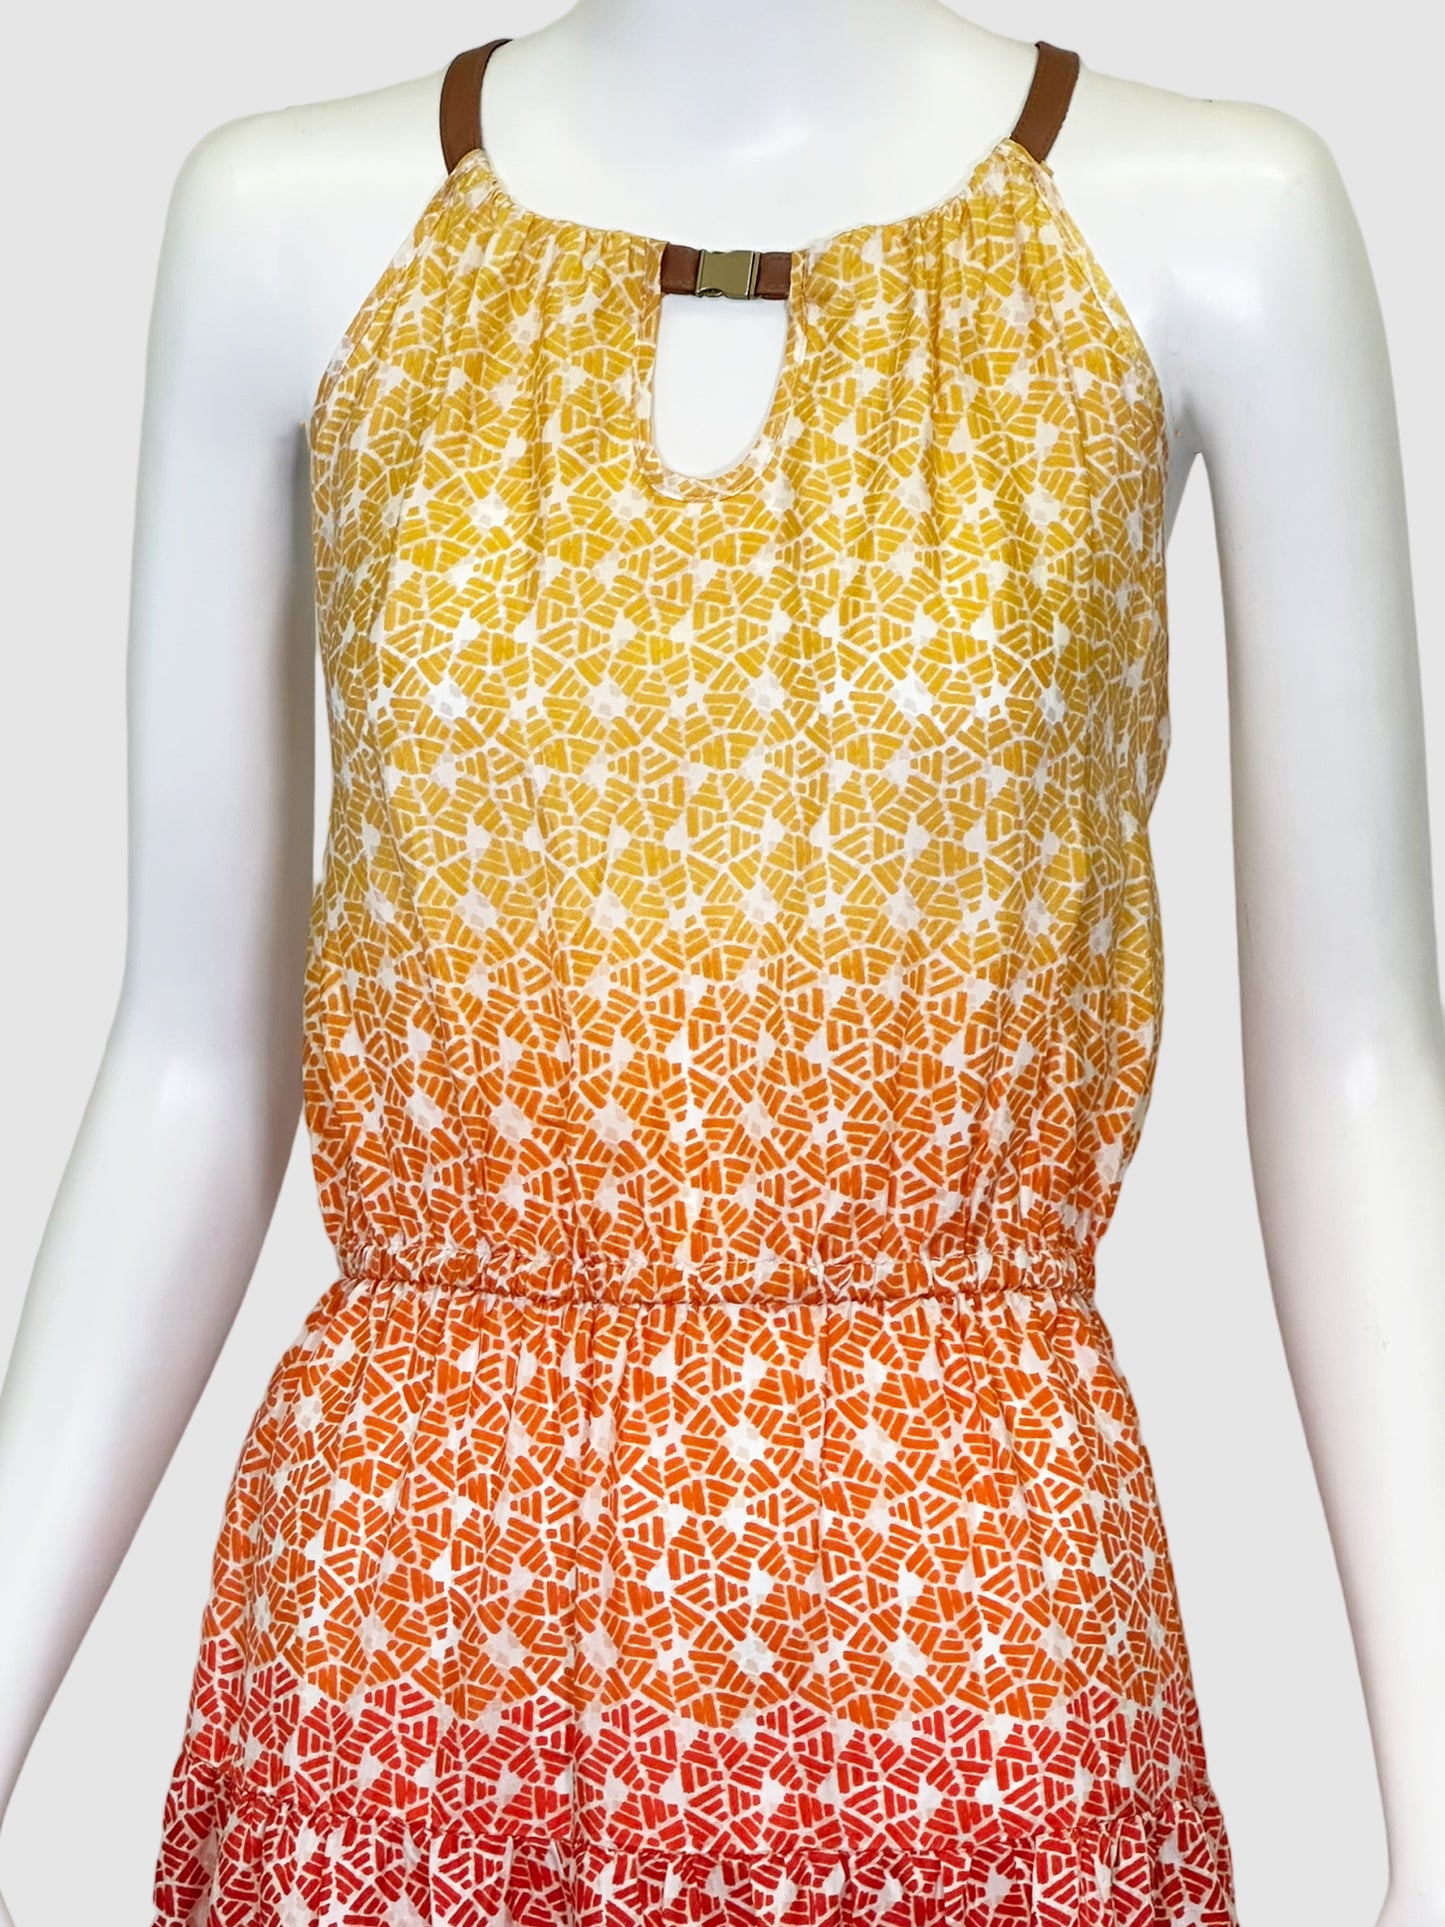 Cynthia Stuff Printed Ombre Maxi Dress - Size 8